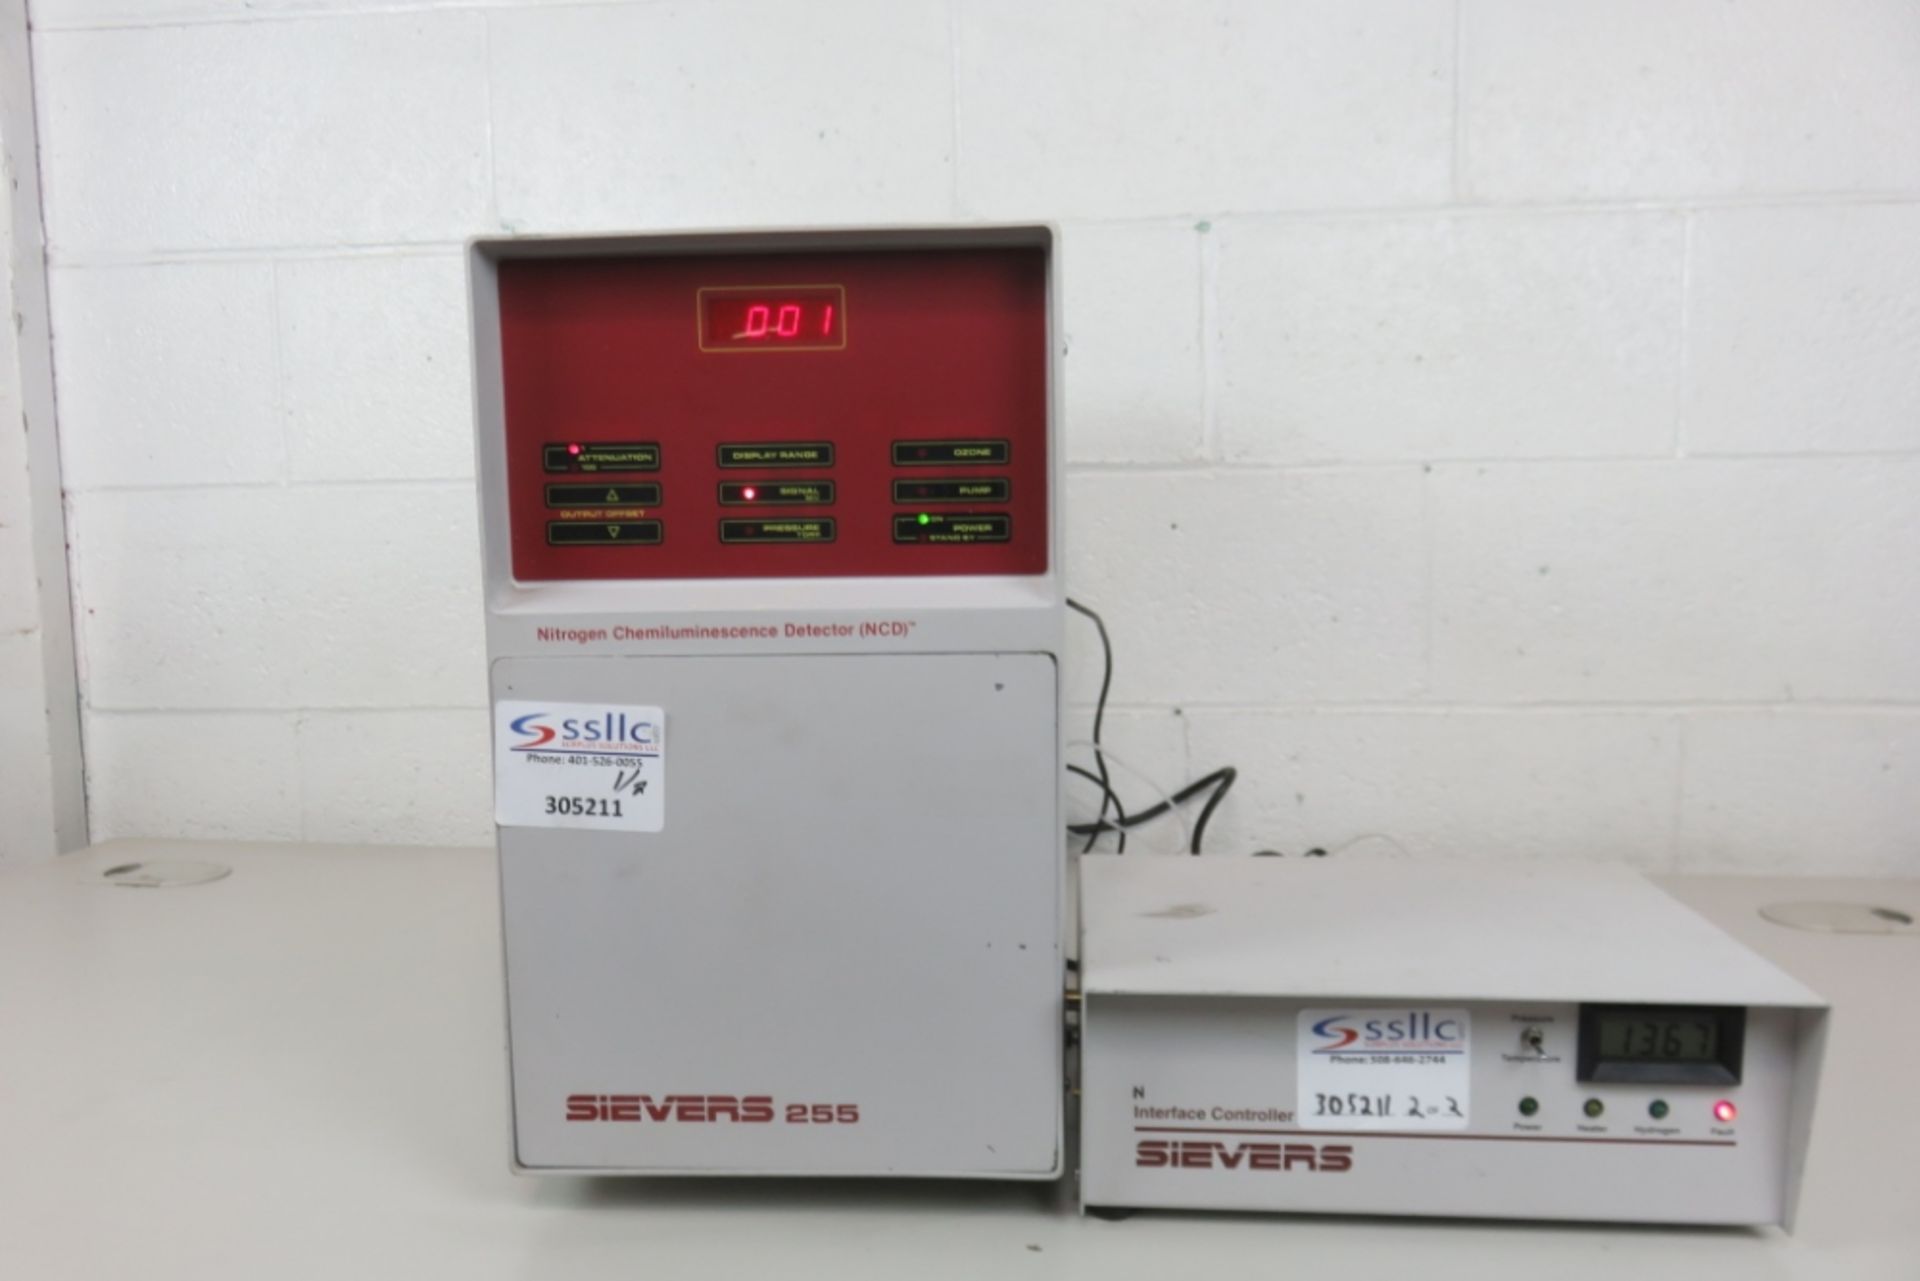 Sievers 255 Nitrogen Chemiluminescence Detector